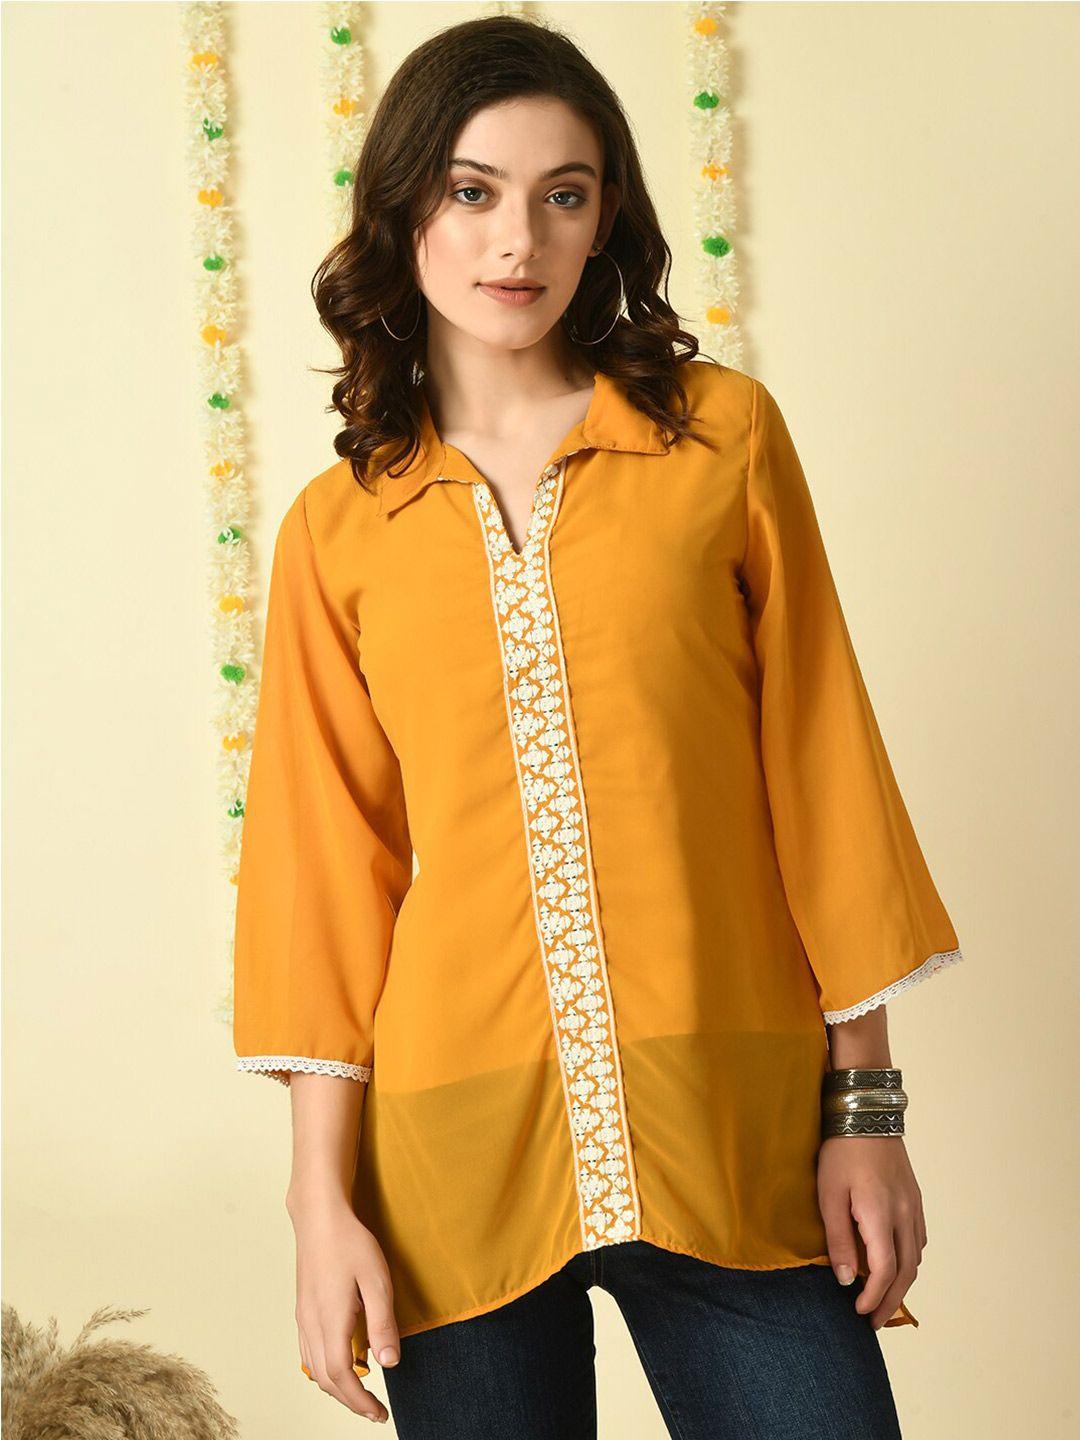 kalini shirt collar embroidered longline shirt style top